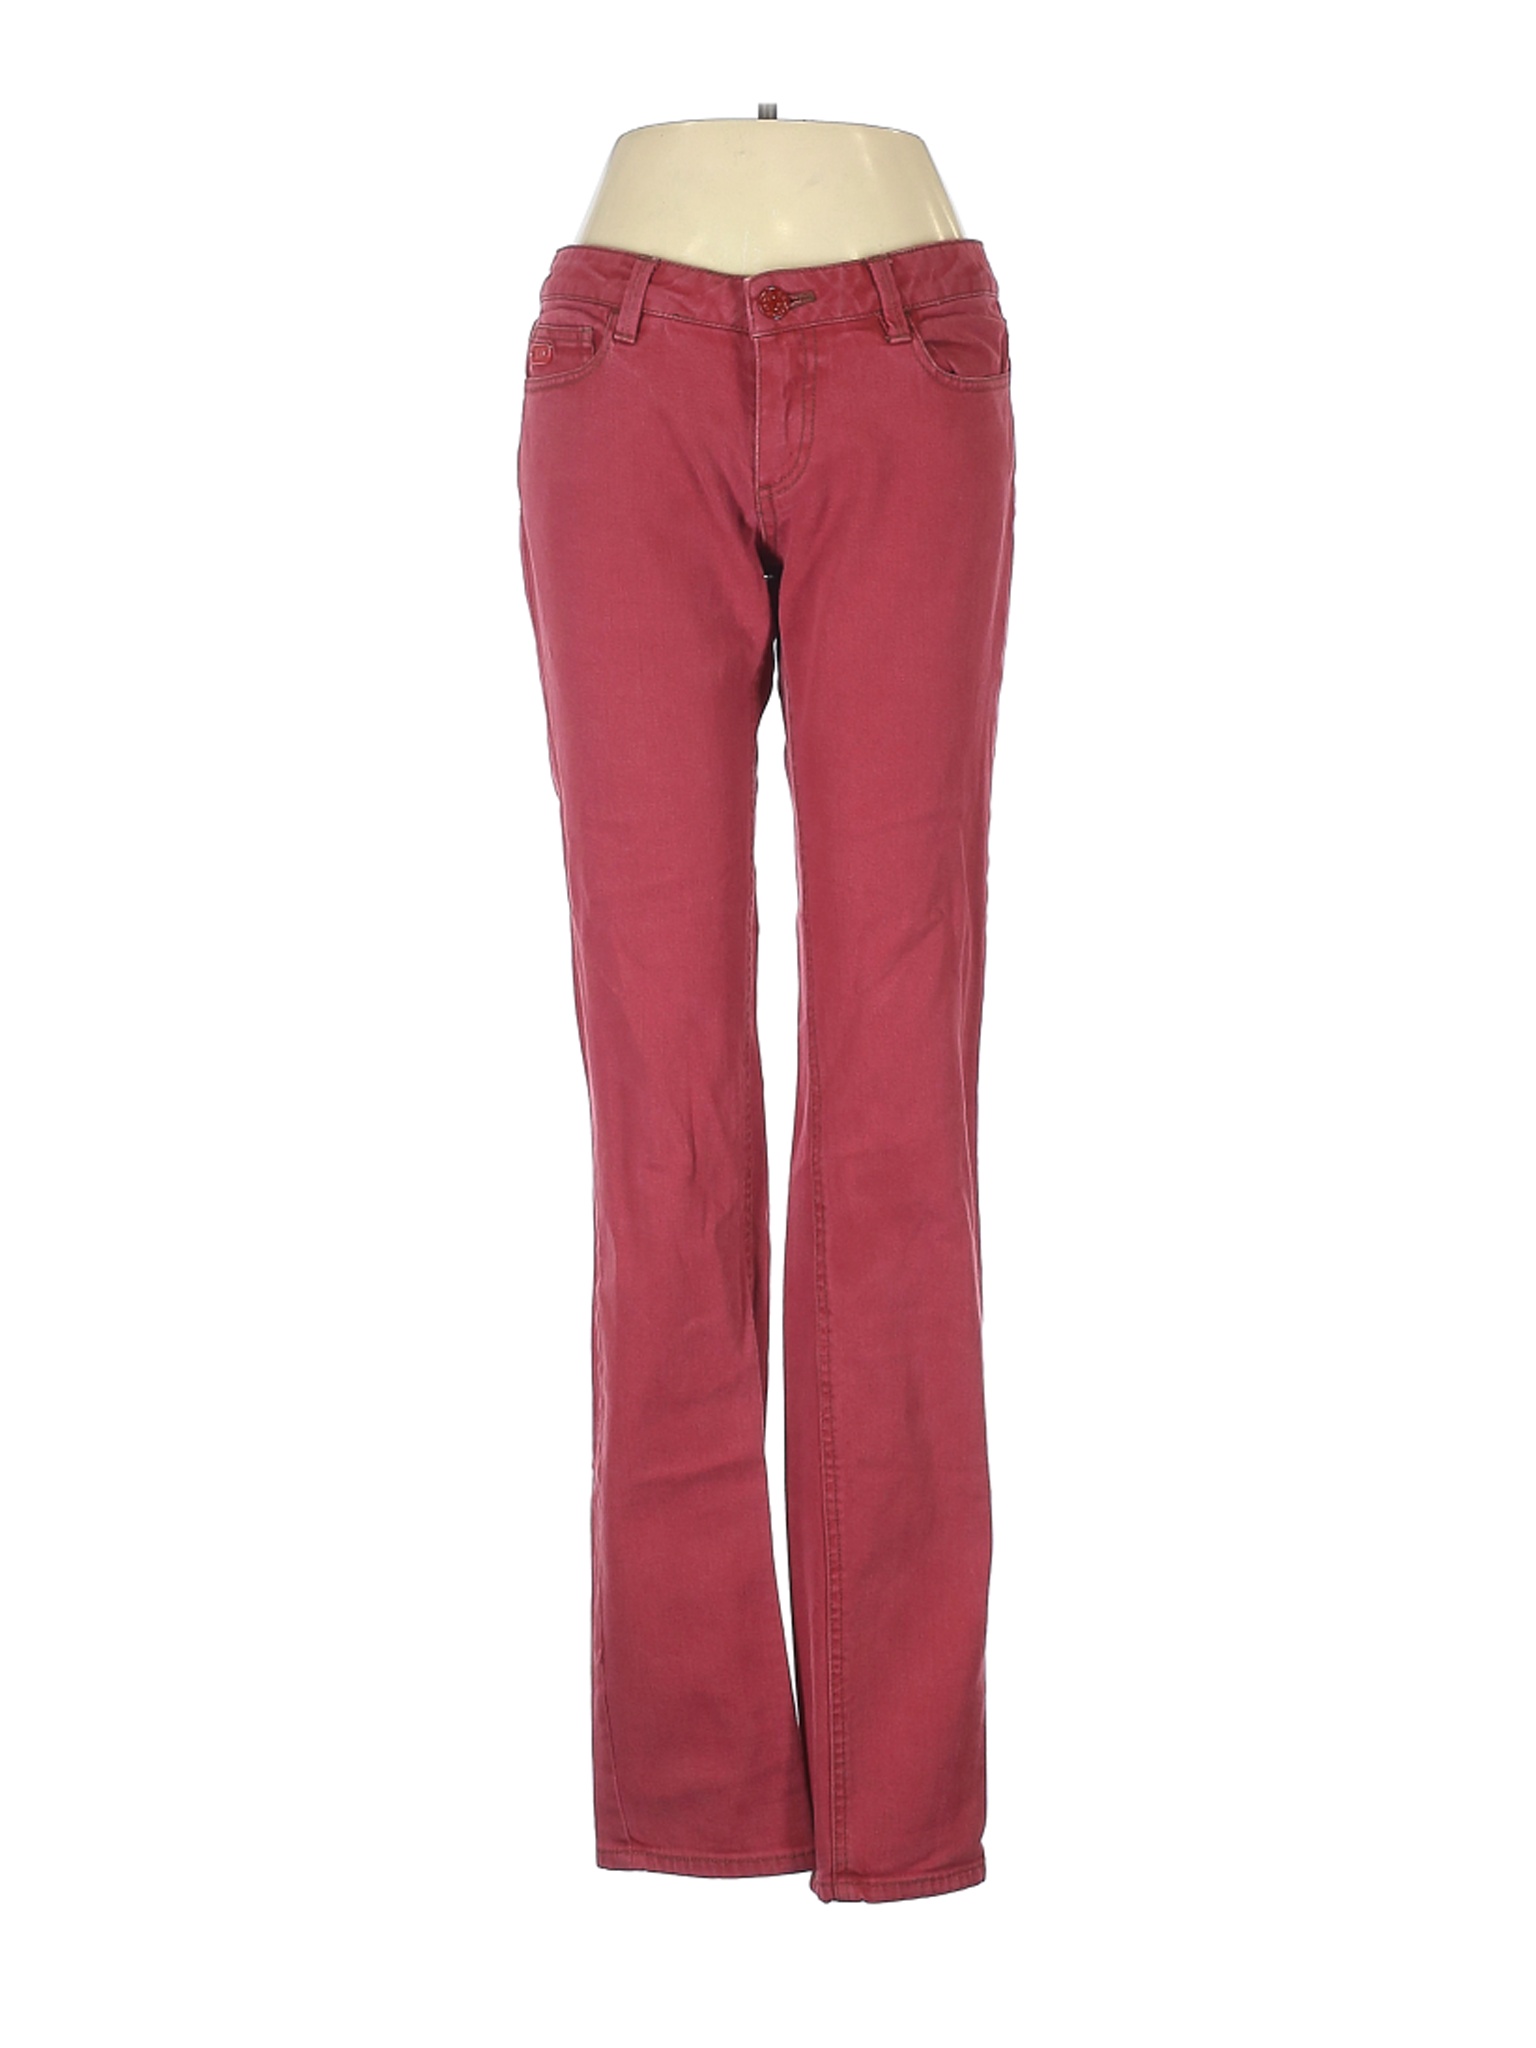 Marc by Marc Jacobs Women Red Jeans 26W | eBay